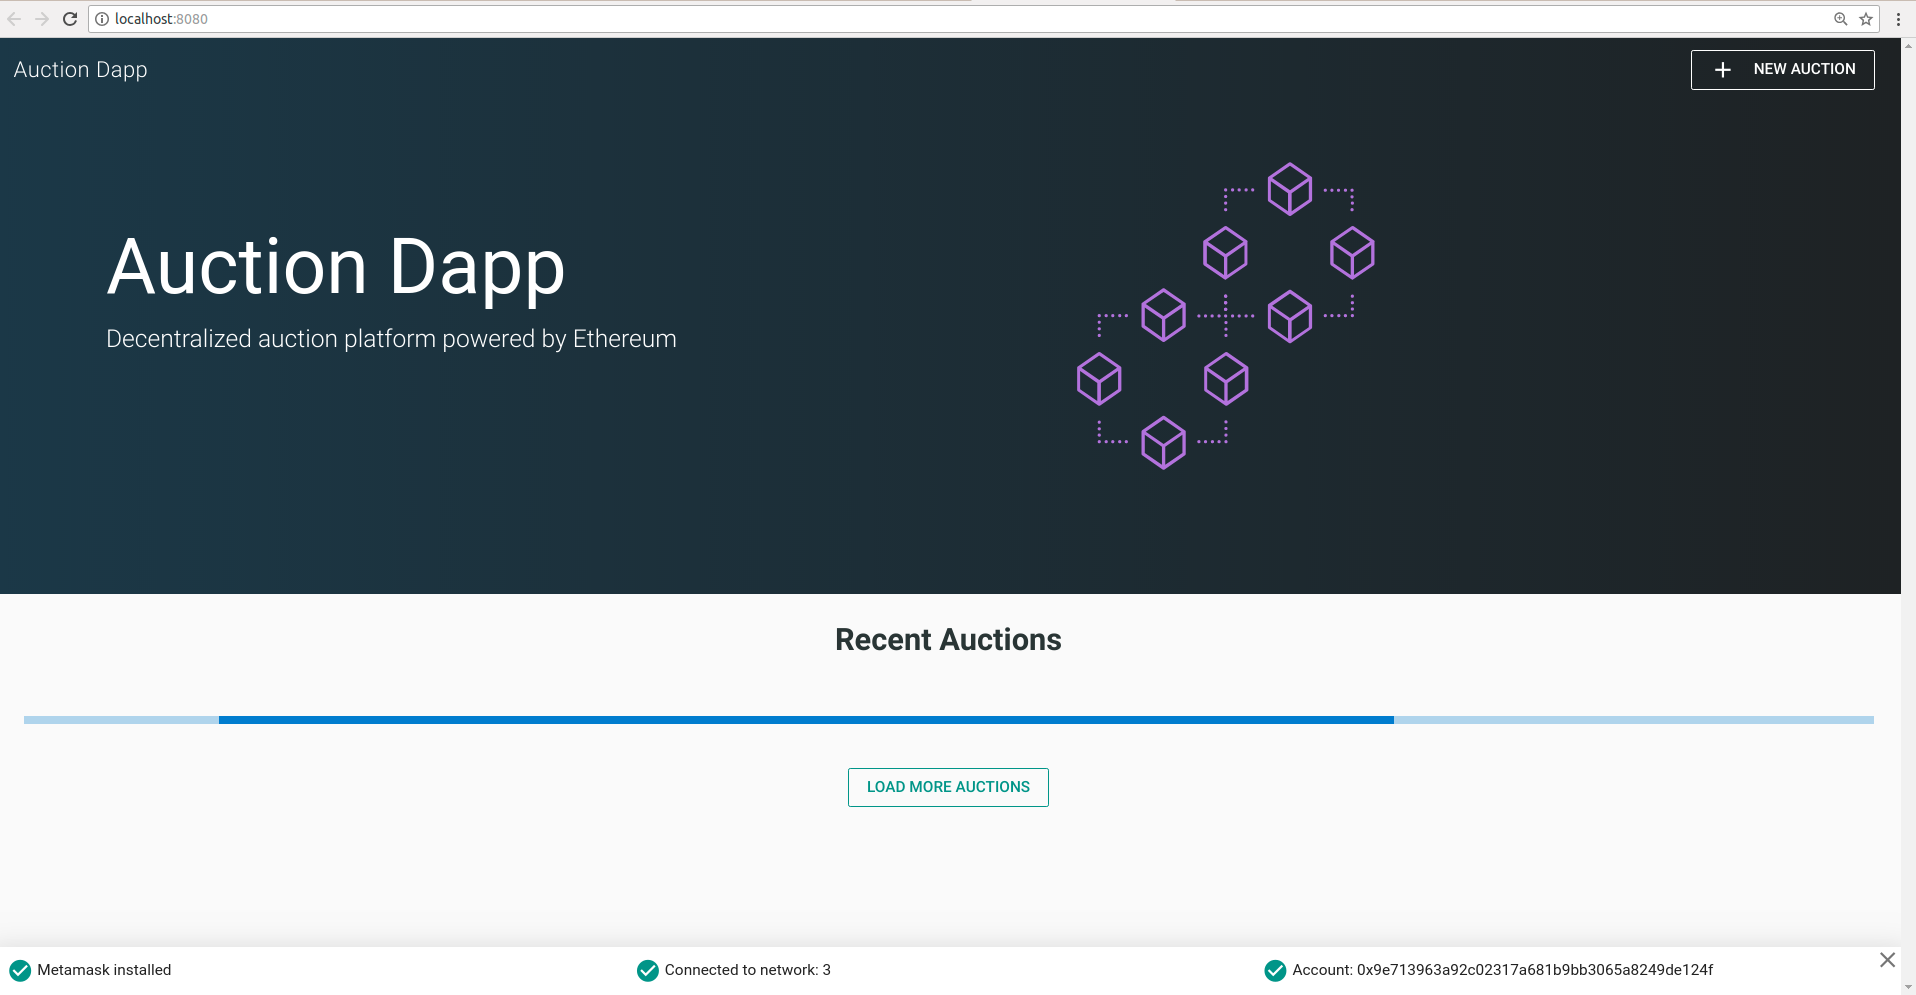 Auction DApp User interface